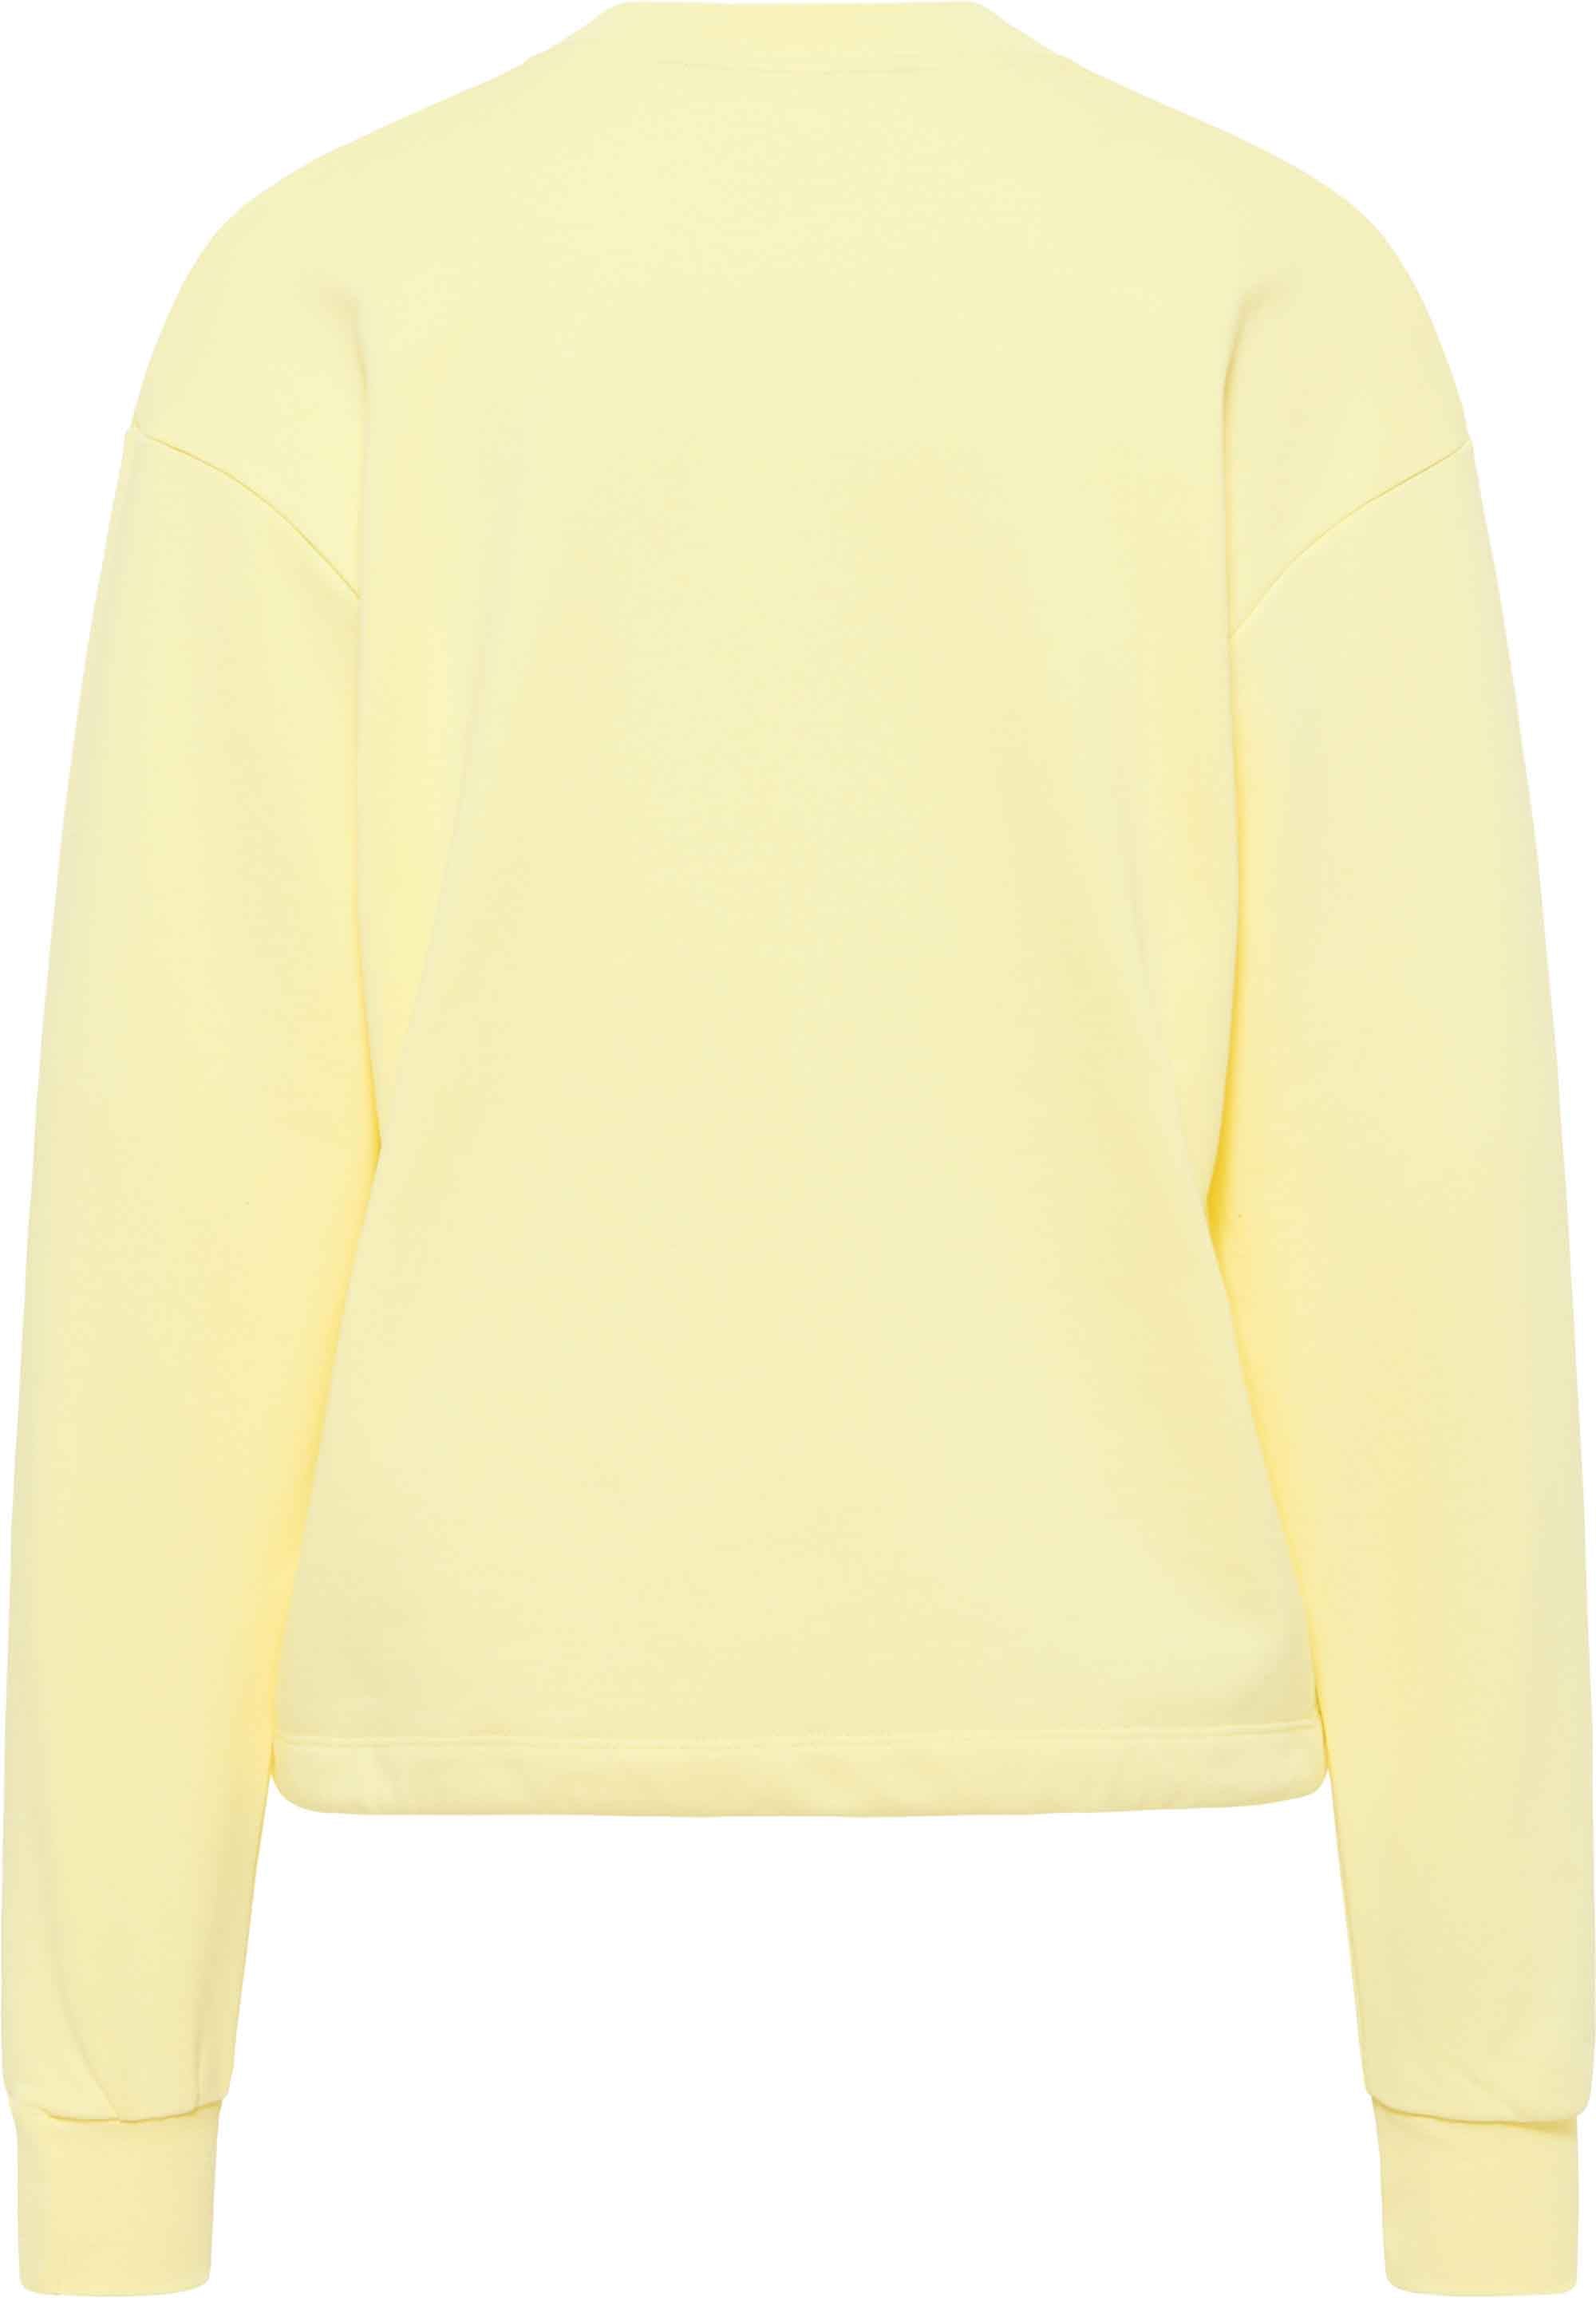 SOMWR FUTURE Sweater YEL003